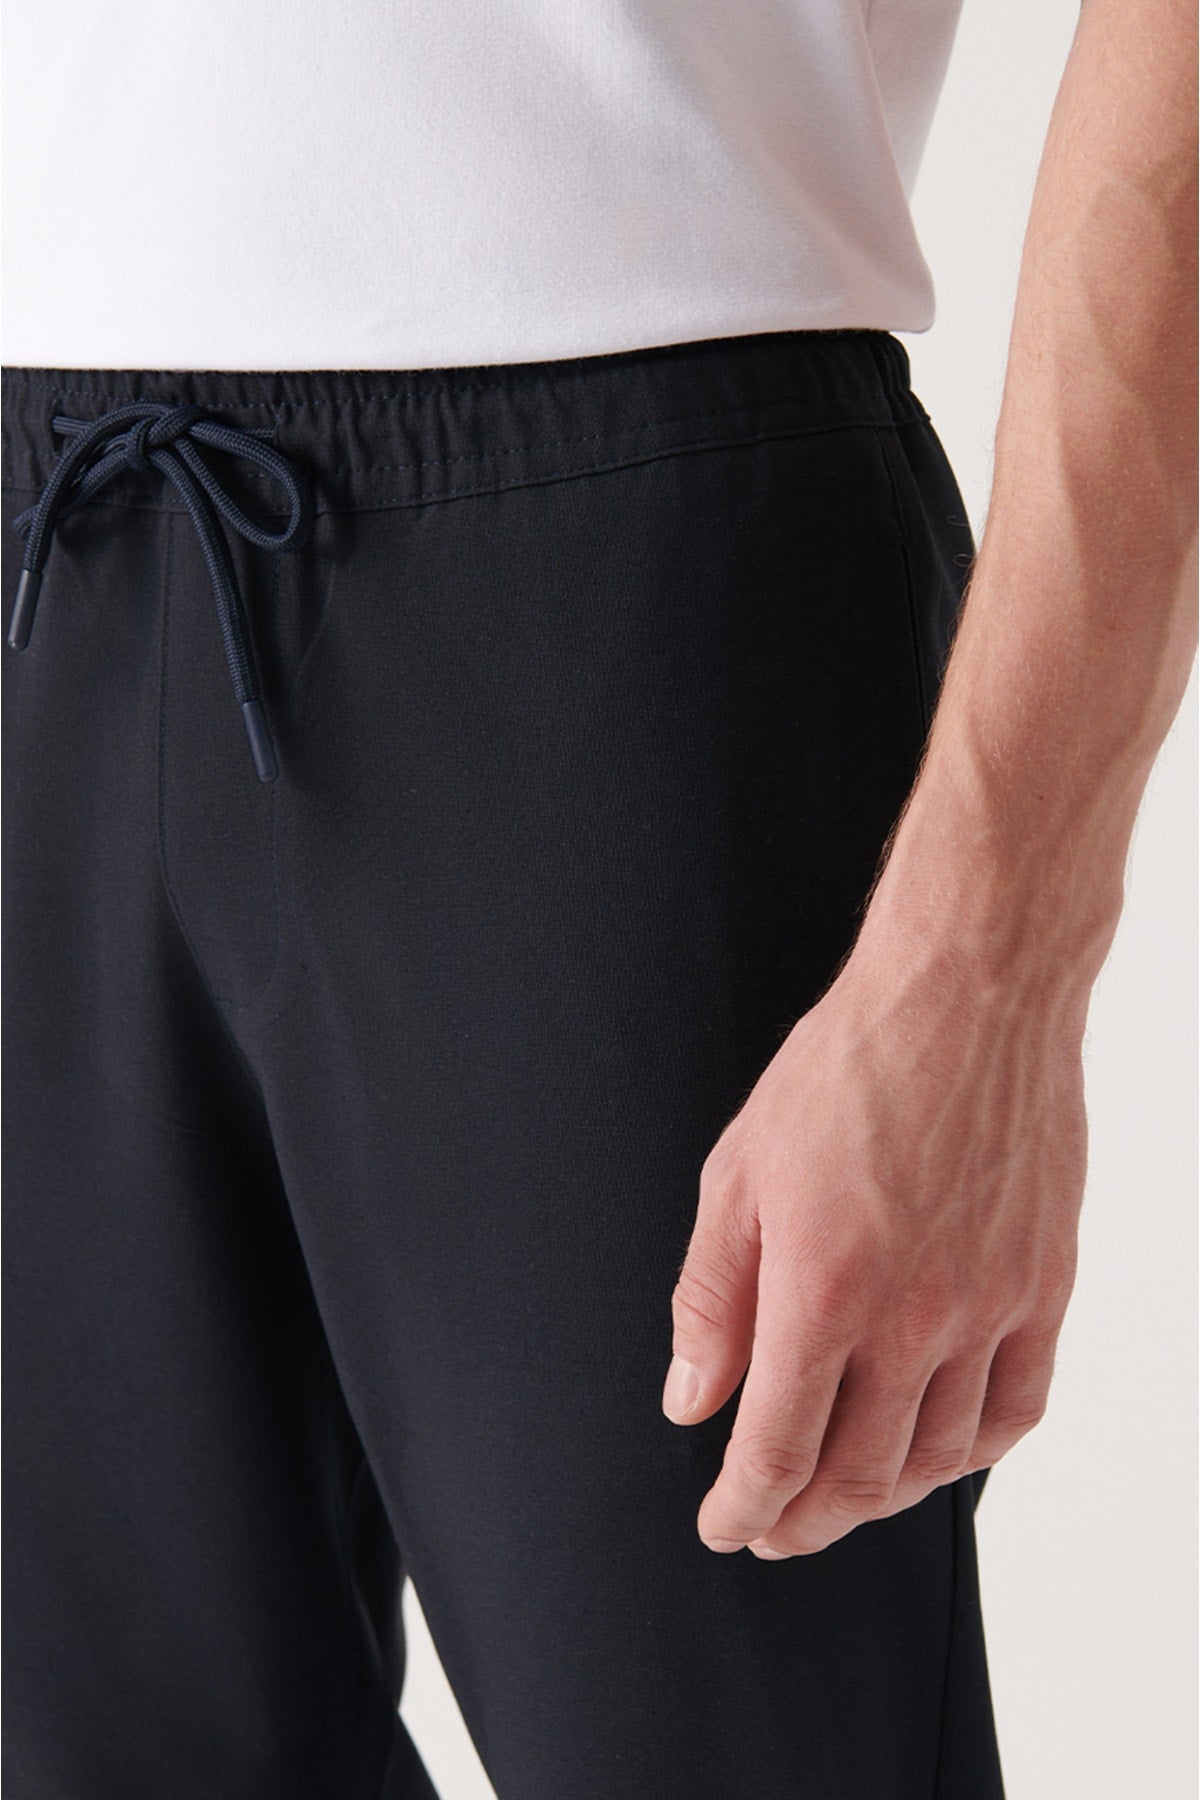 Men's navy blue basic relaxed fit jogger pants E003000